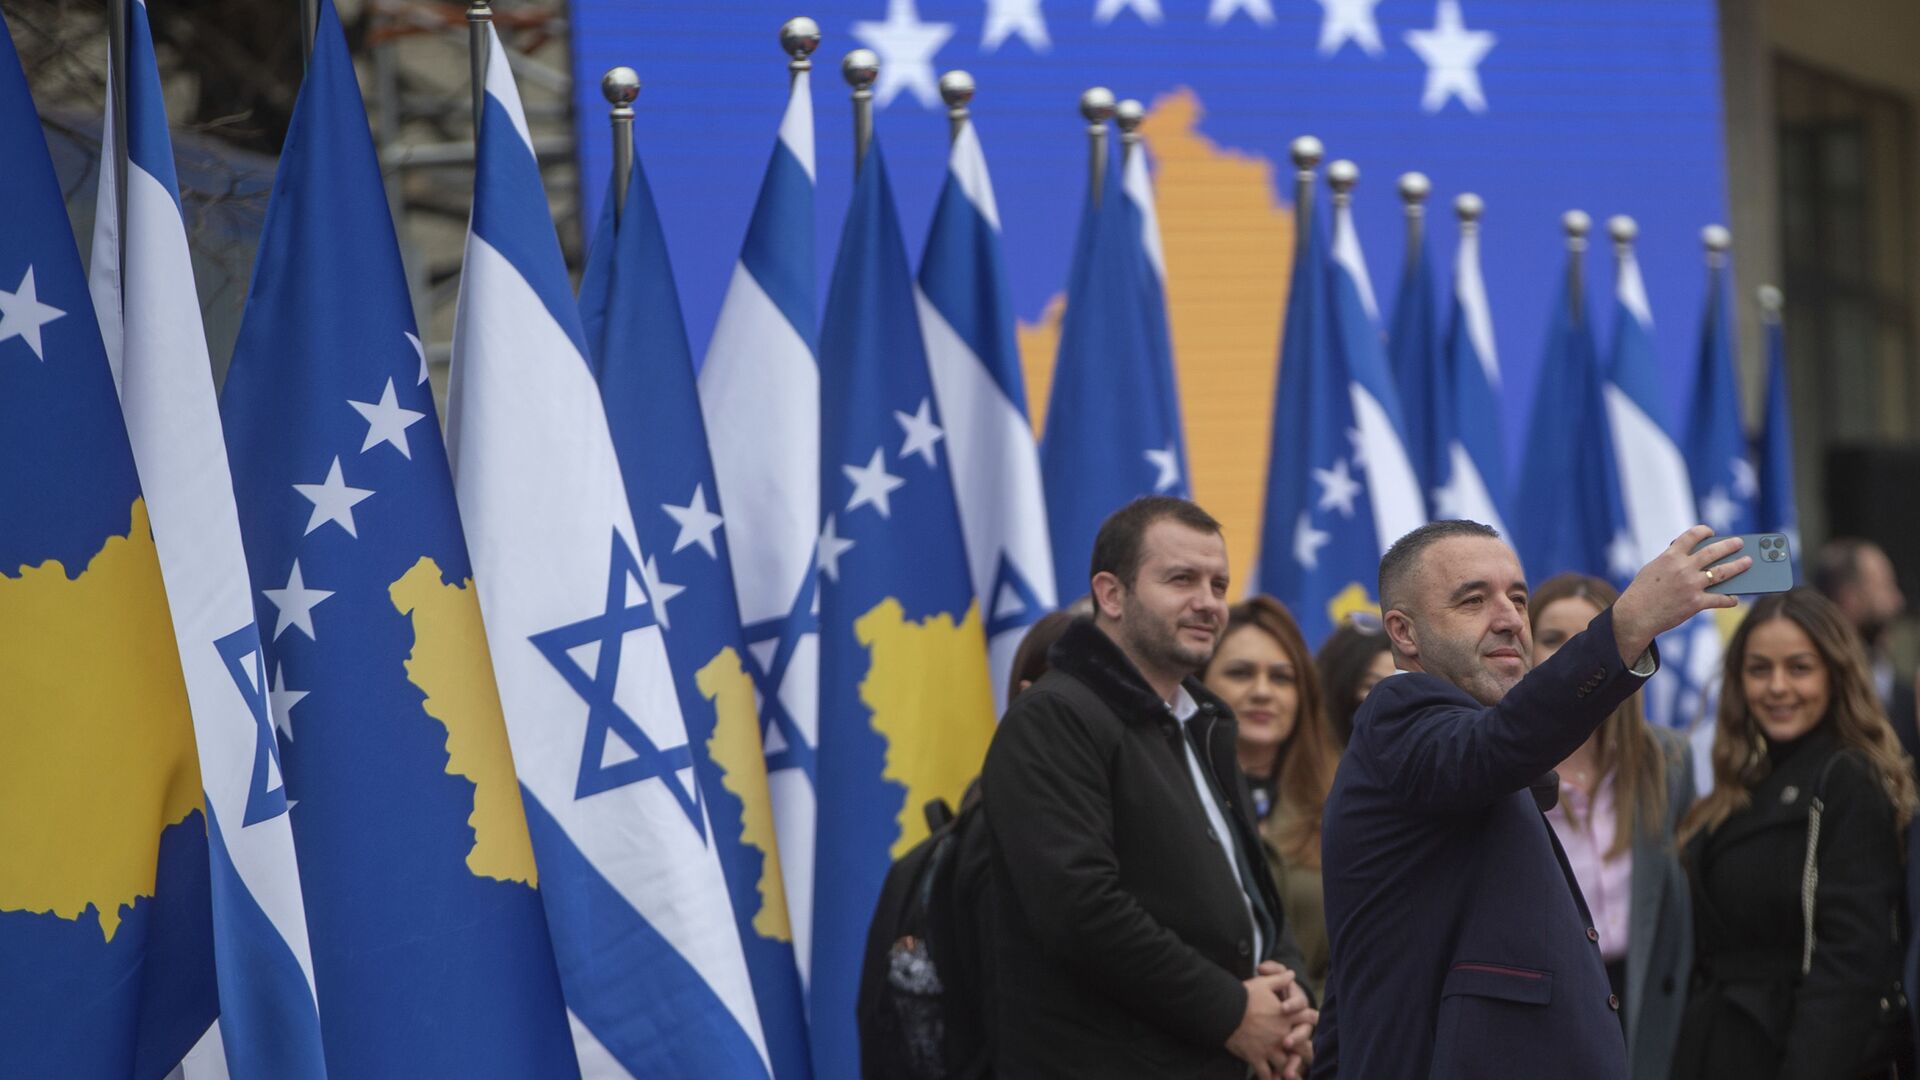 Izraelske zastave u Prištini povodom uspostavljanja diplomatskih odnosa sa takozvanim Kosovom - Sputnik Srbija, 1920, 01.02.2021